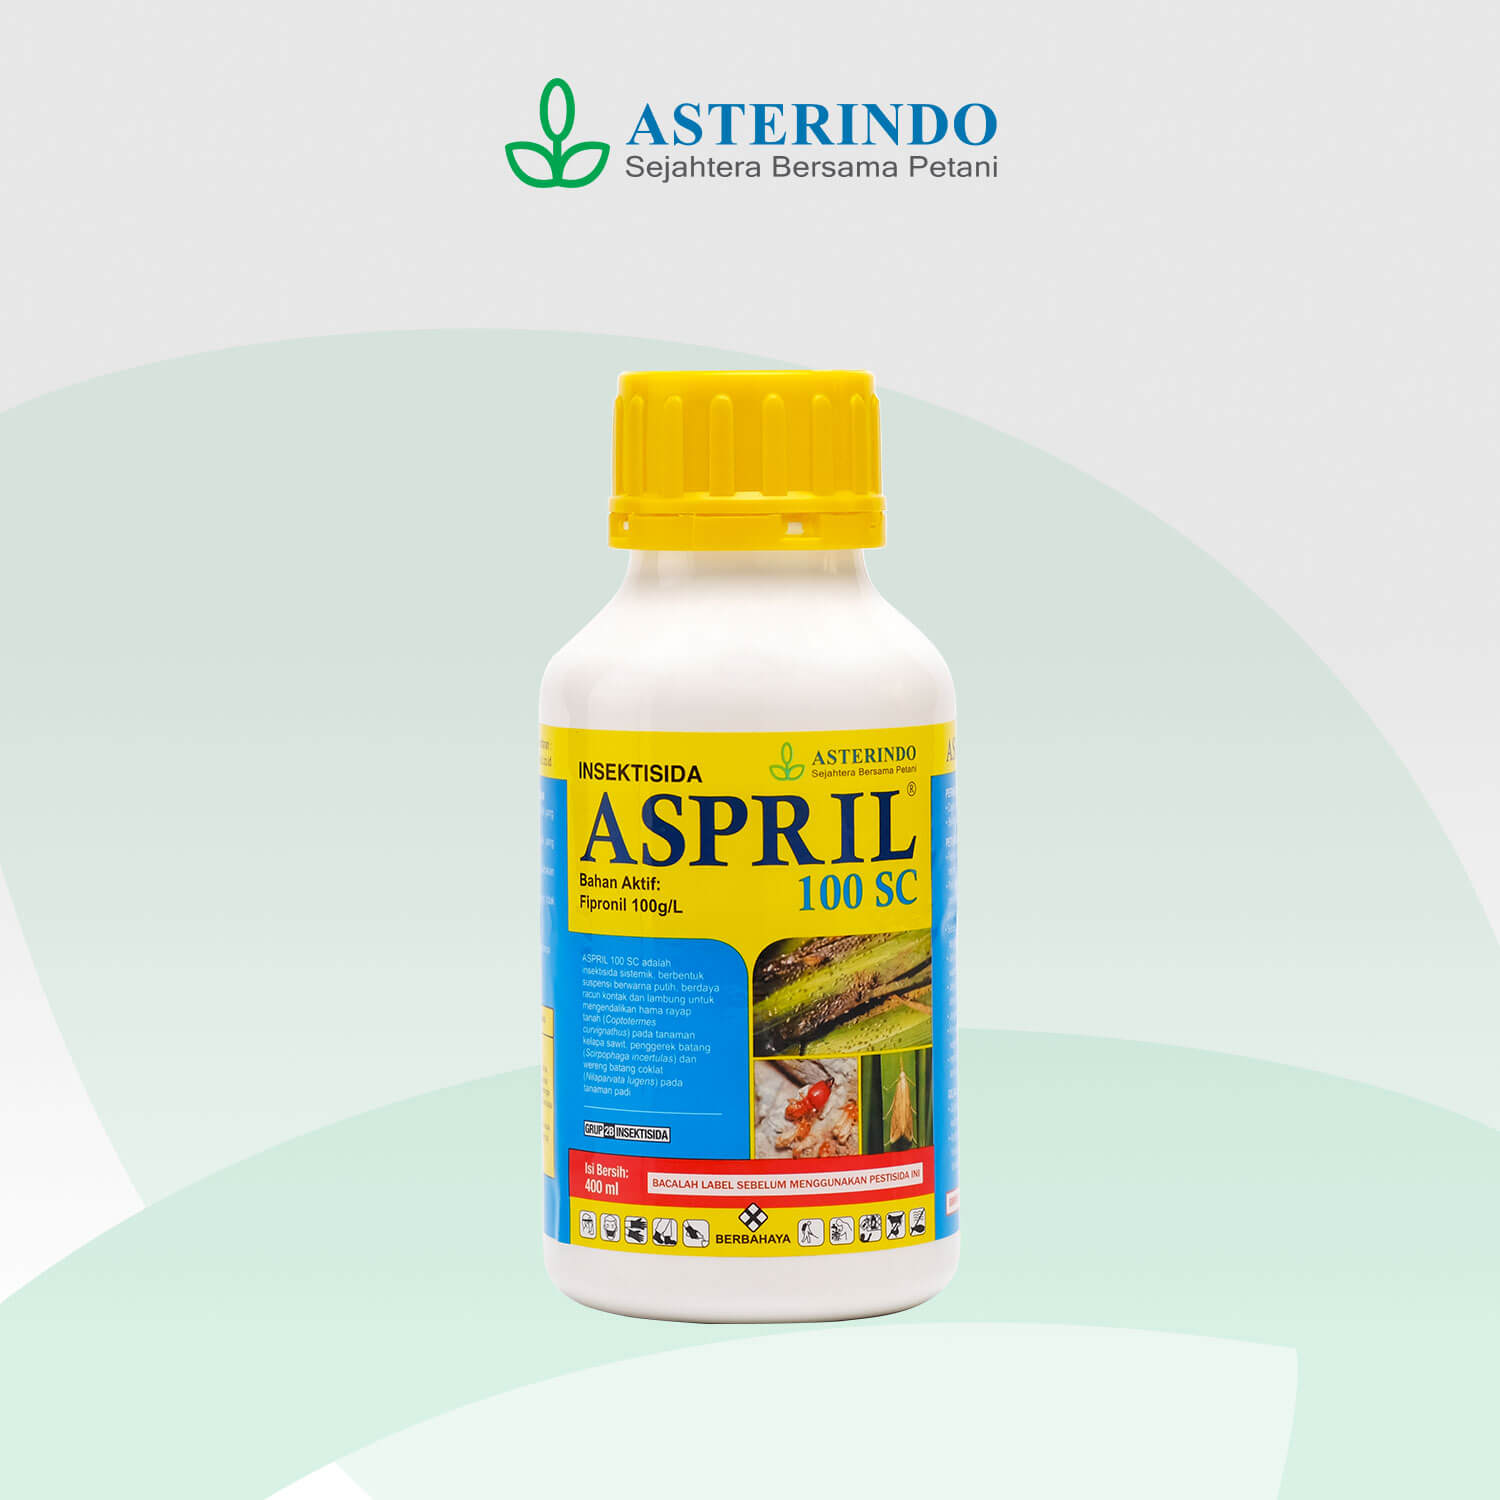 ASPRIL-insektisida-Asterindo